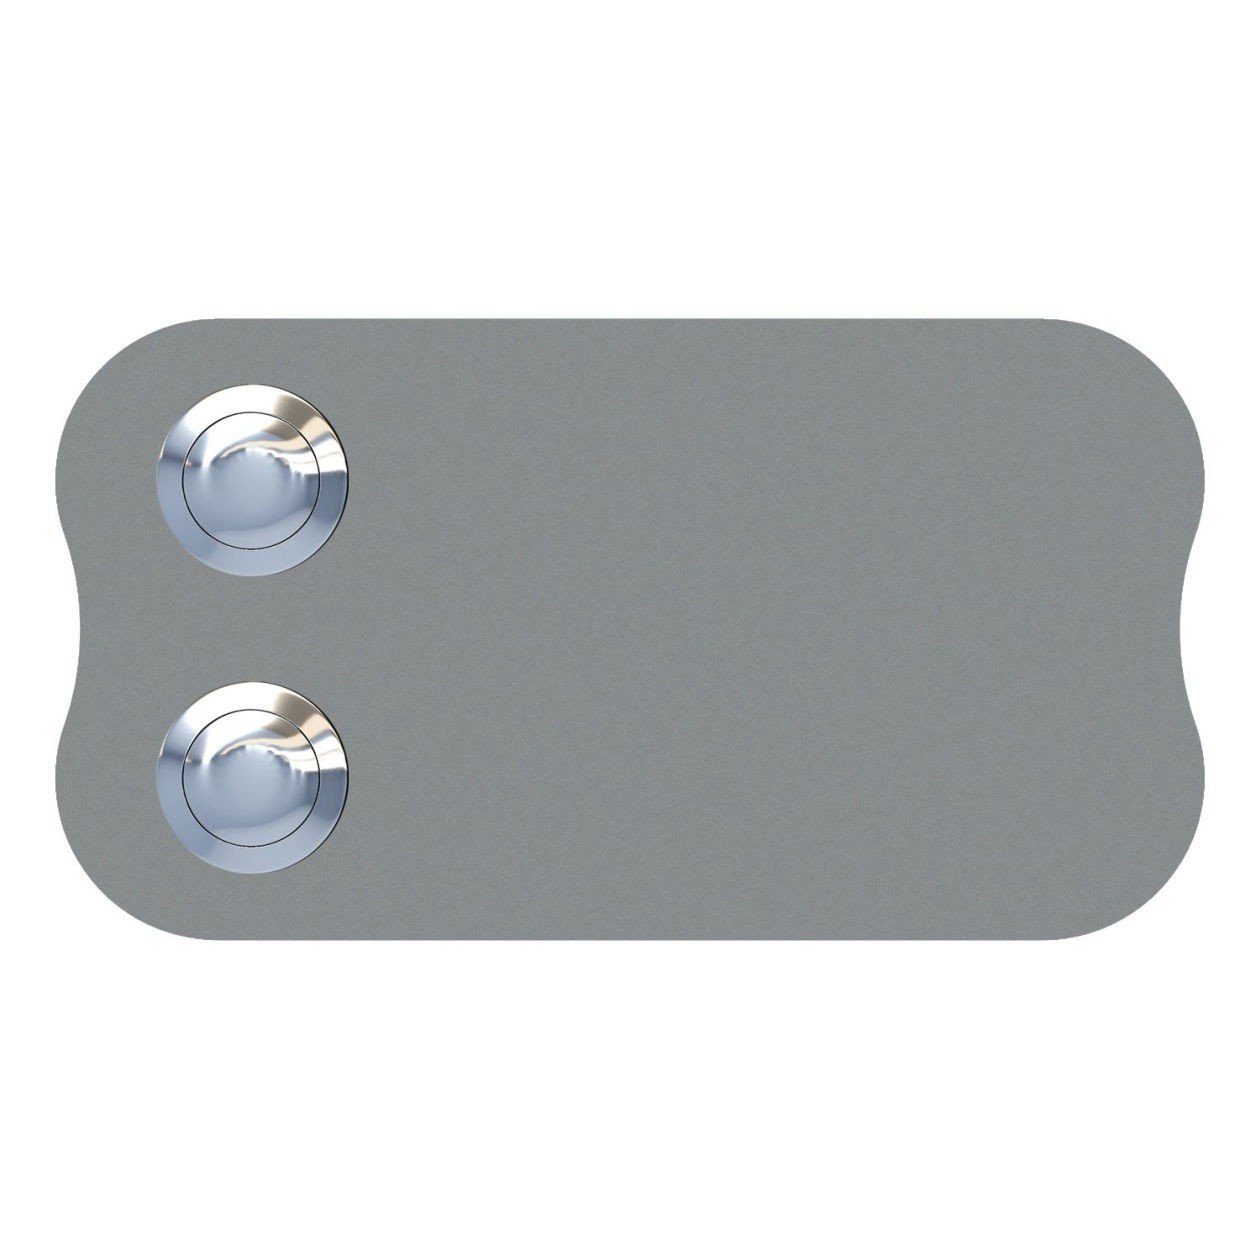 Bravios Briefkasten Klingeltaster Longcircle for Two Grau Metallic